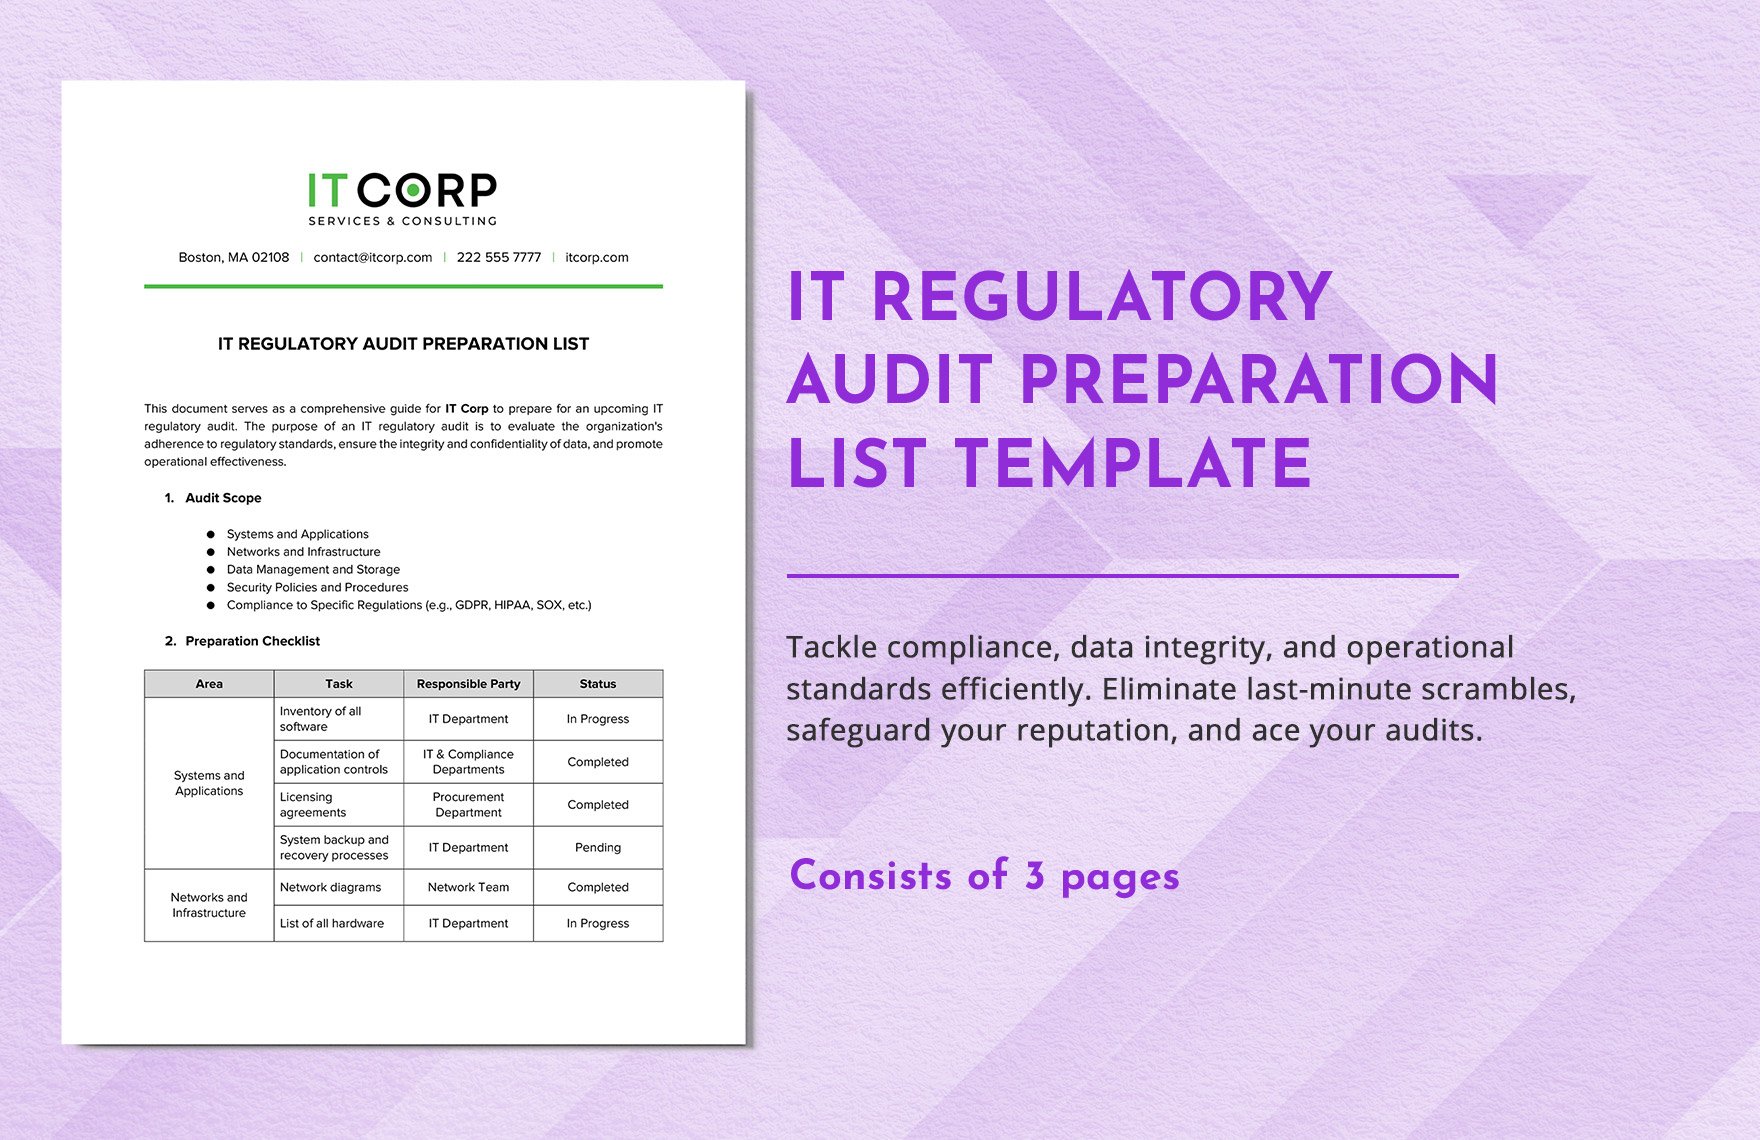 IT Regulatory Audit Preparation List Template in Word, Google Docs, PDF